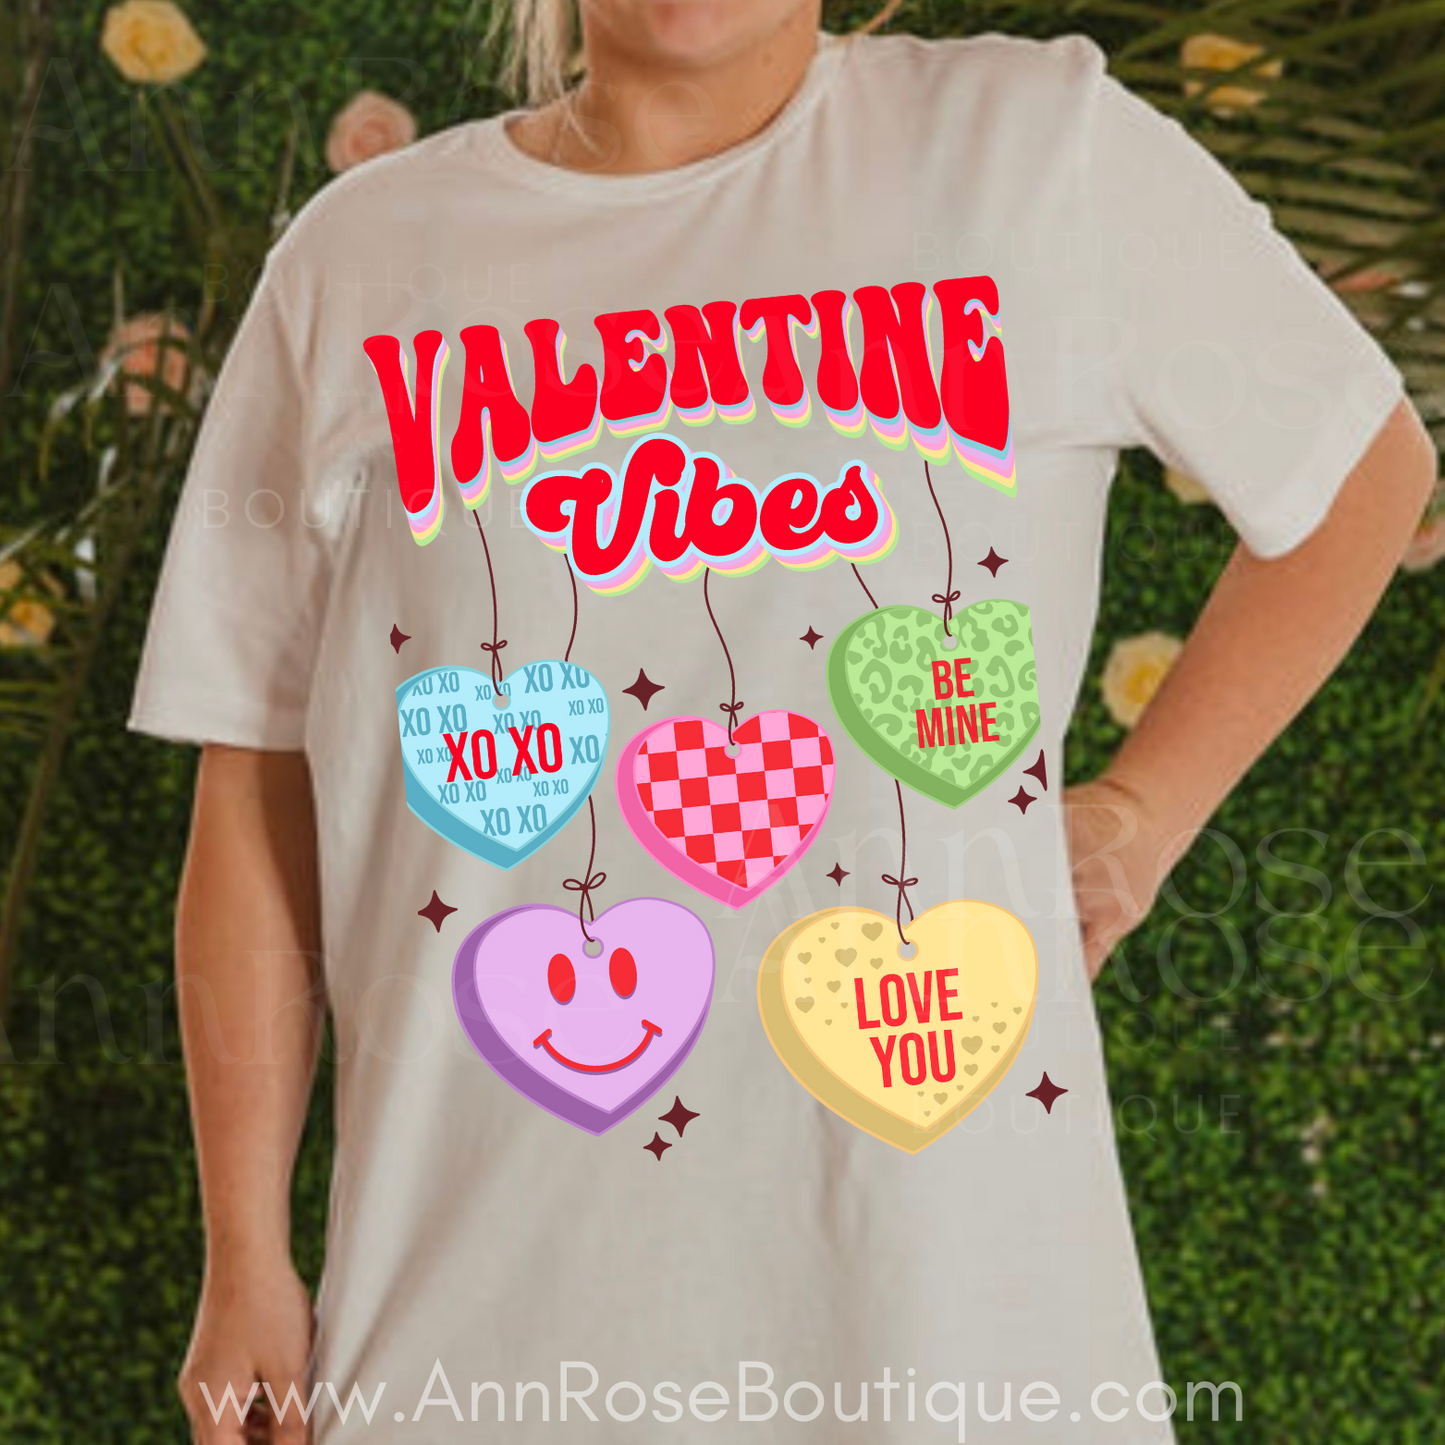 Valentine vibes hearts